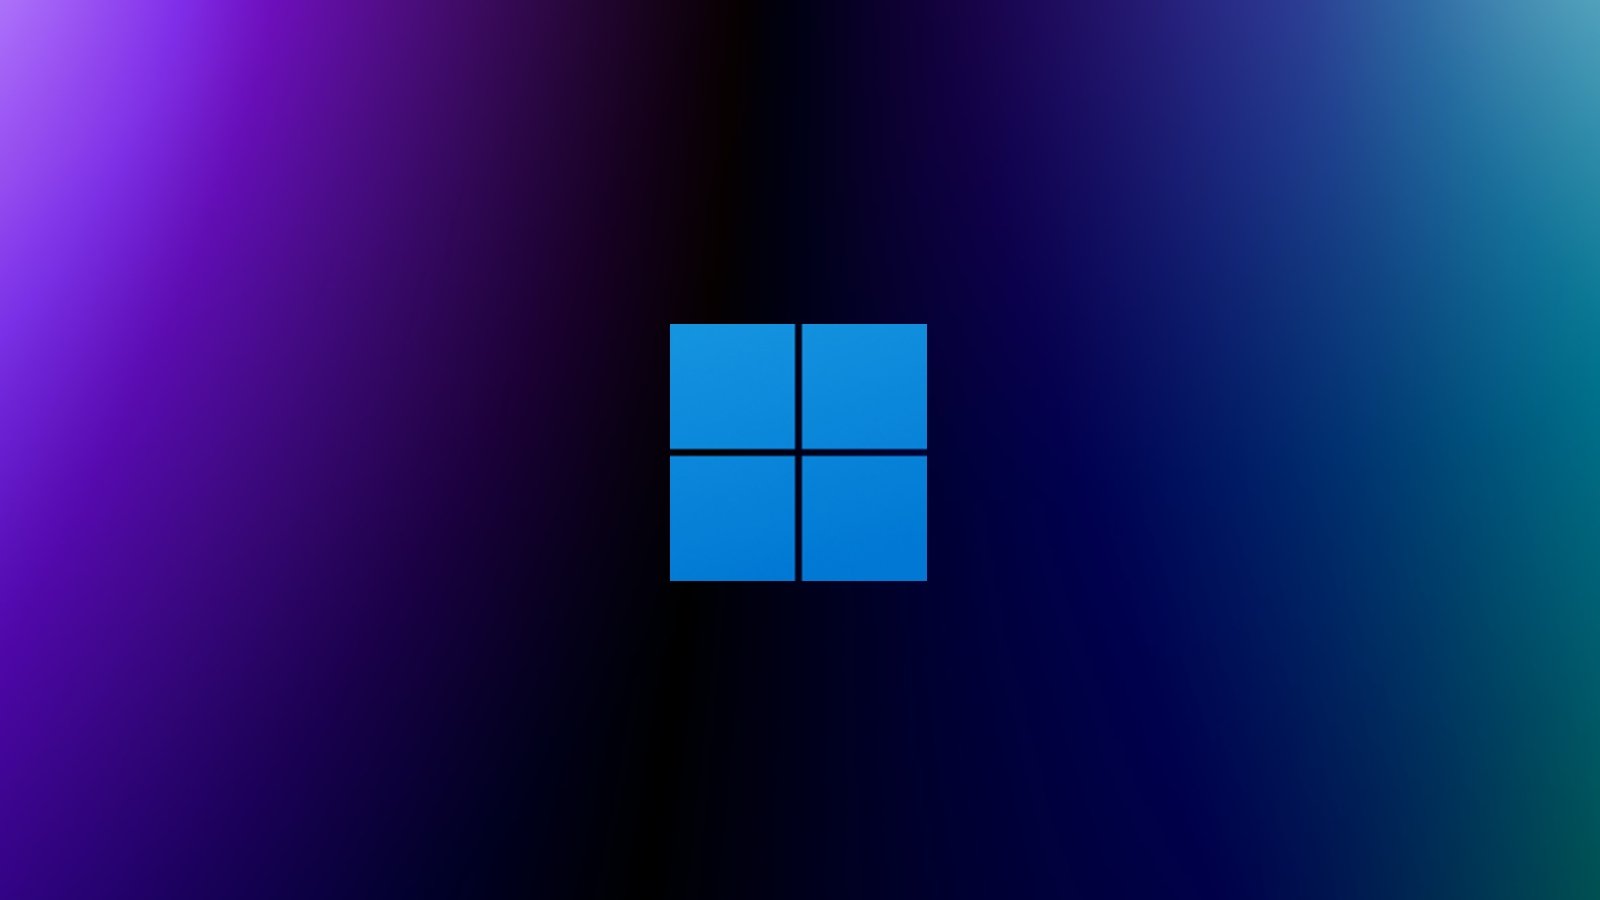 Windows 11 Wallpaper Hd - Default Windows 11 Wallpaper By Ratnesh77543